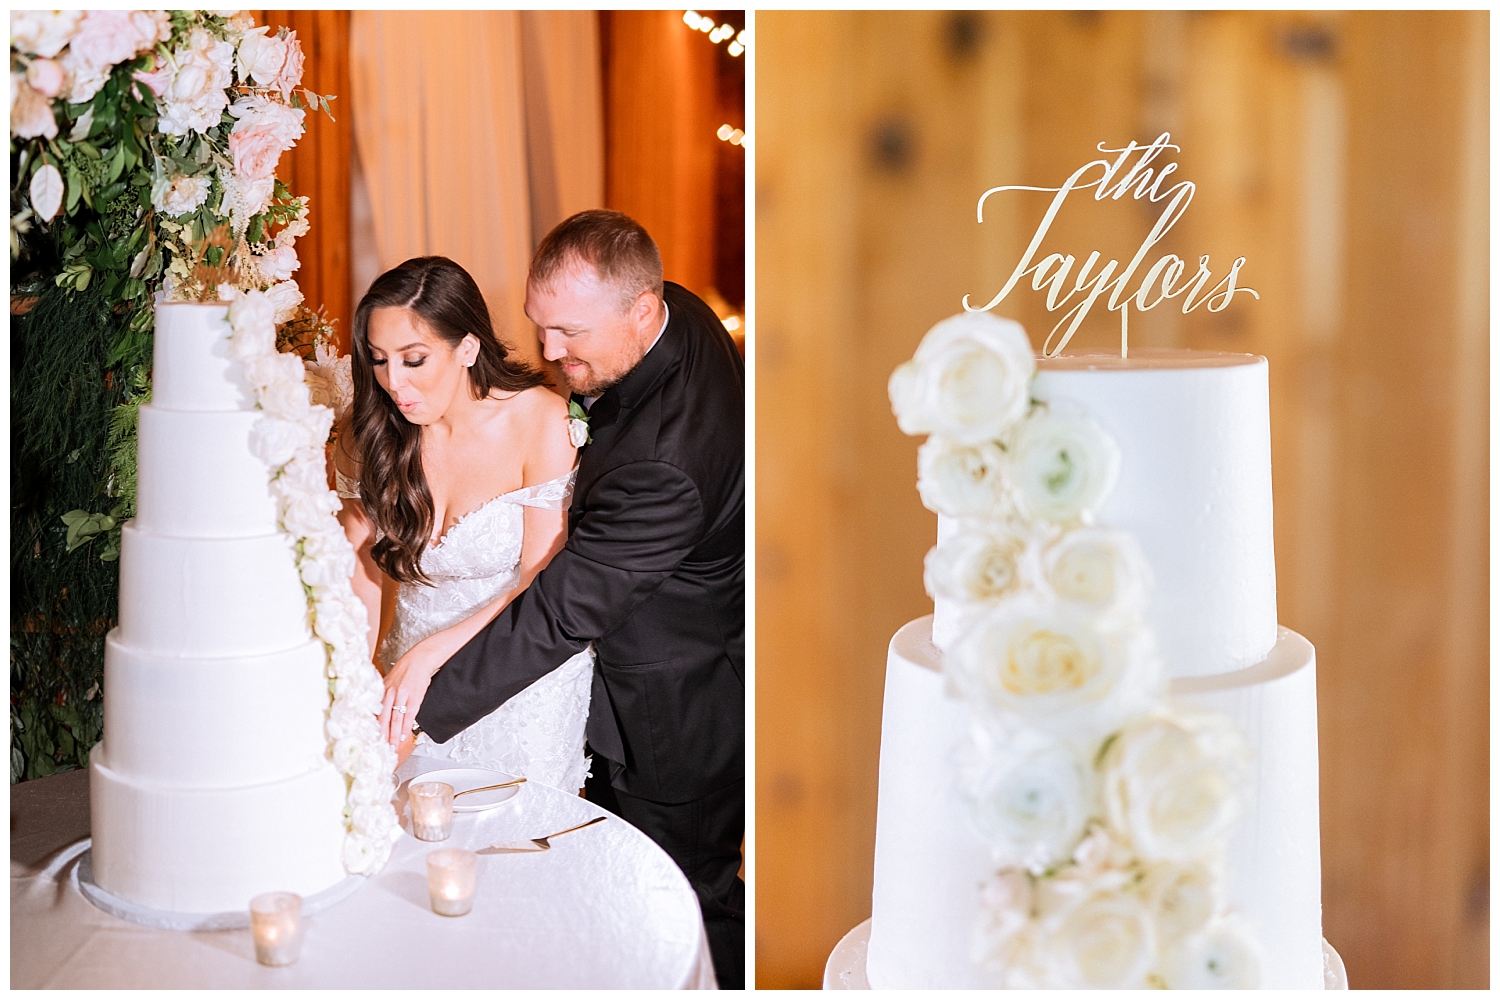 Bride & Groom cut five tier white wedding cake at Castle Hill Cidery Wedding in Keswick, Virginia